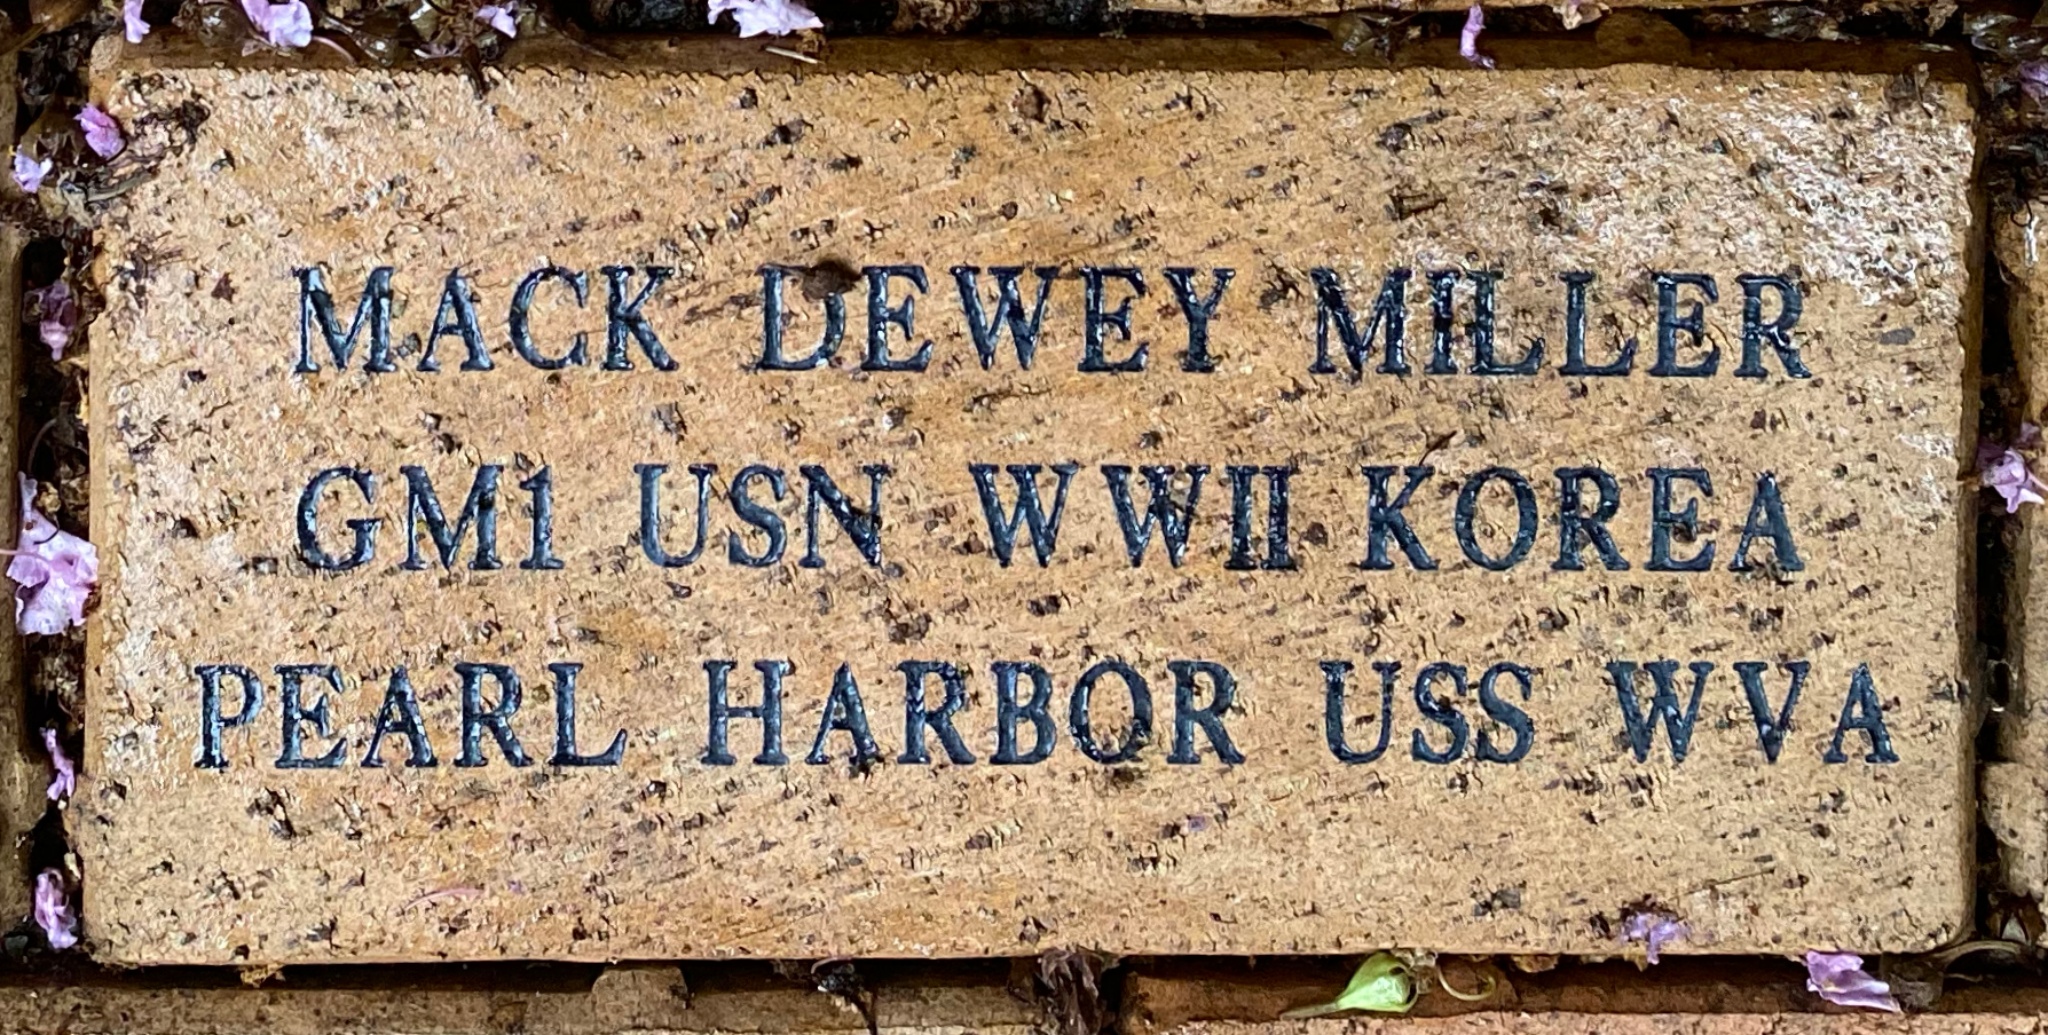 MACK DEWEY MILLER GMI USN WWII KOREA PEARL HARBOR USS WVA